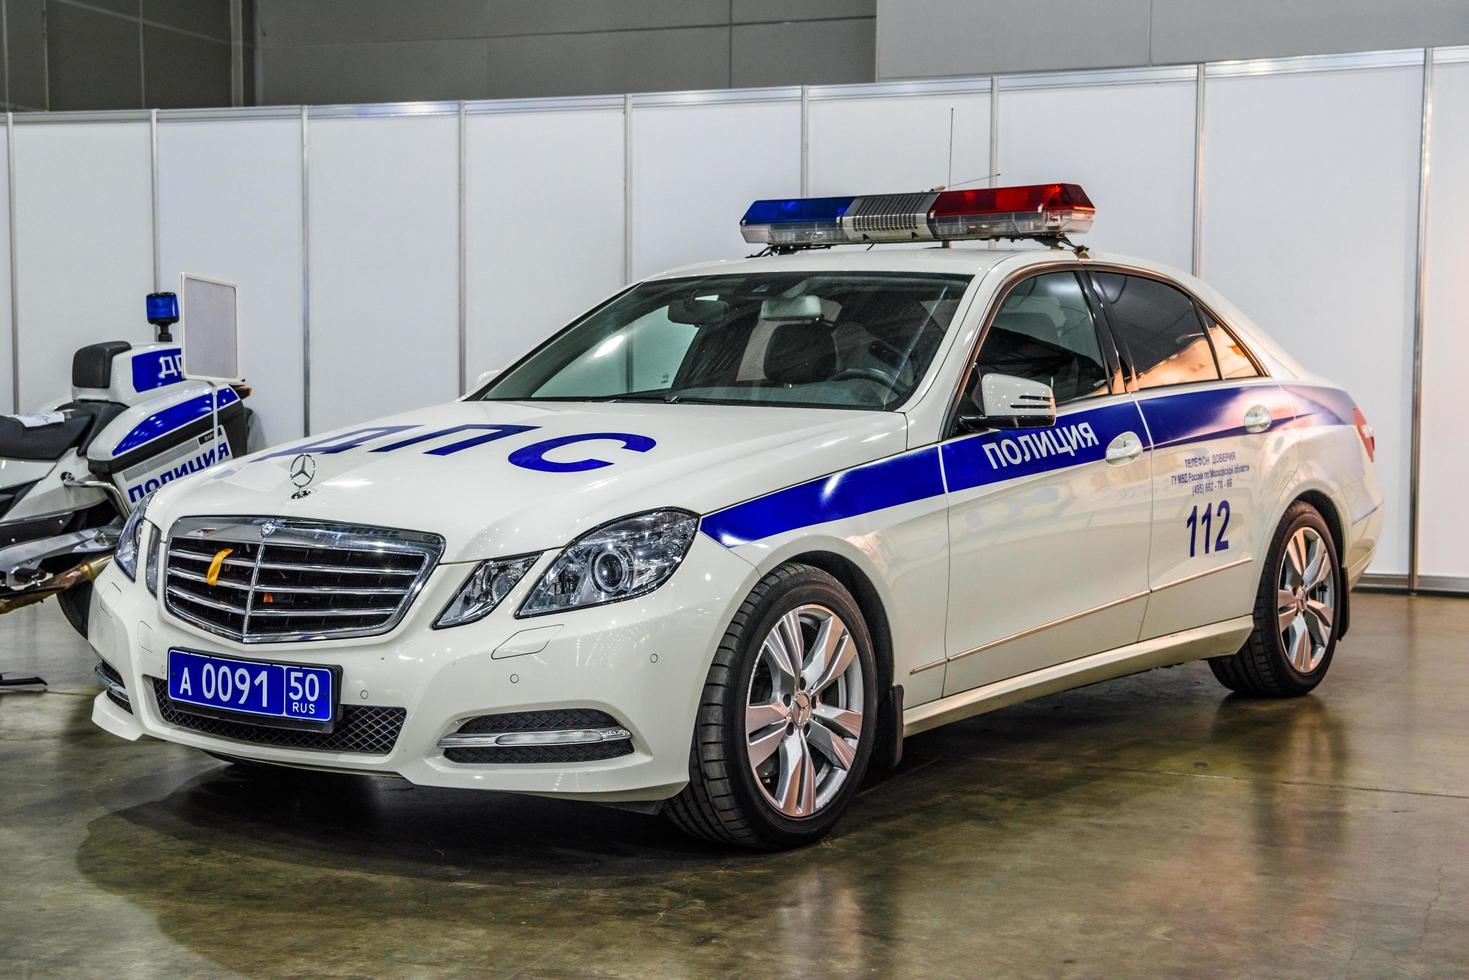 Moskou - aug 2016 mercedes-benz e-klasse w212 militie Politie gepresenteerd Bij mias Moskou Internationale auto- salon Aan augustus 20, 2016 in Moskou, Rusland foto